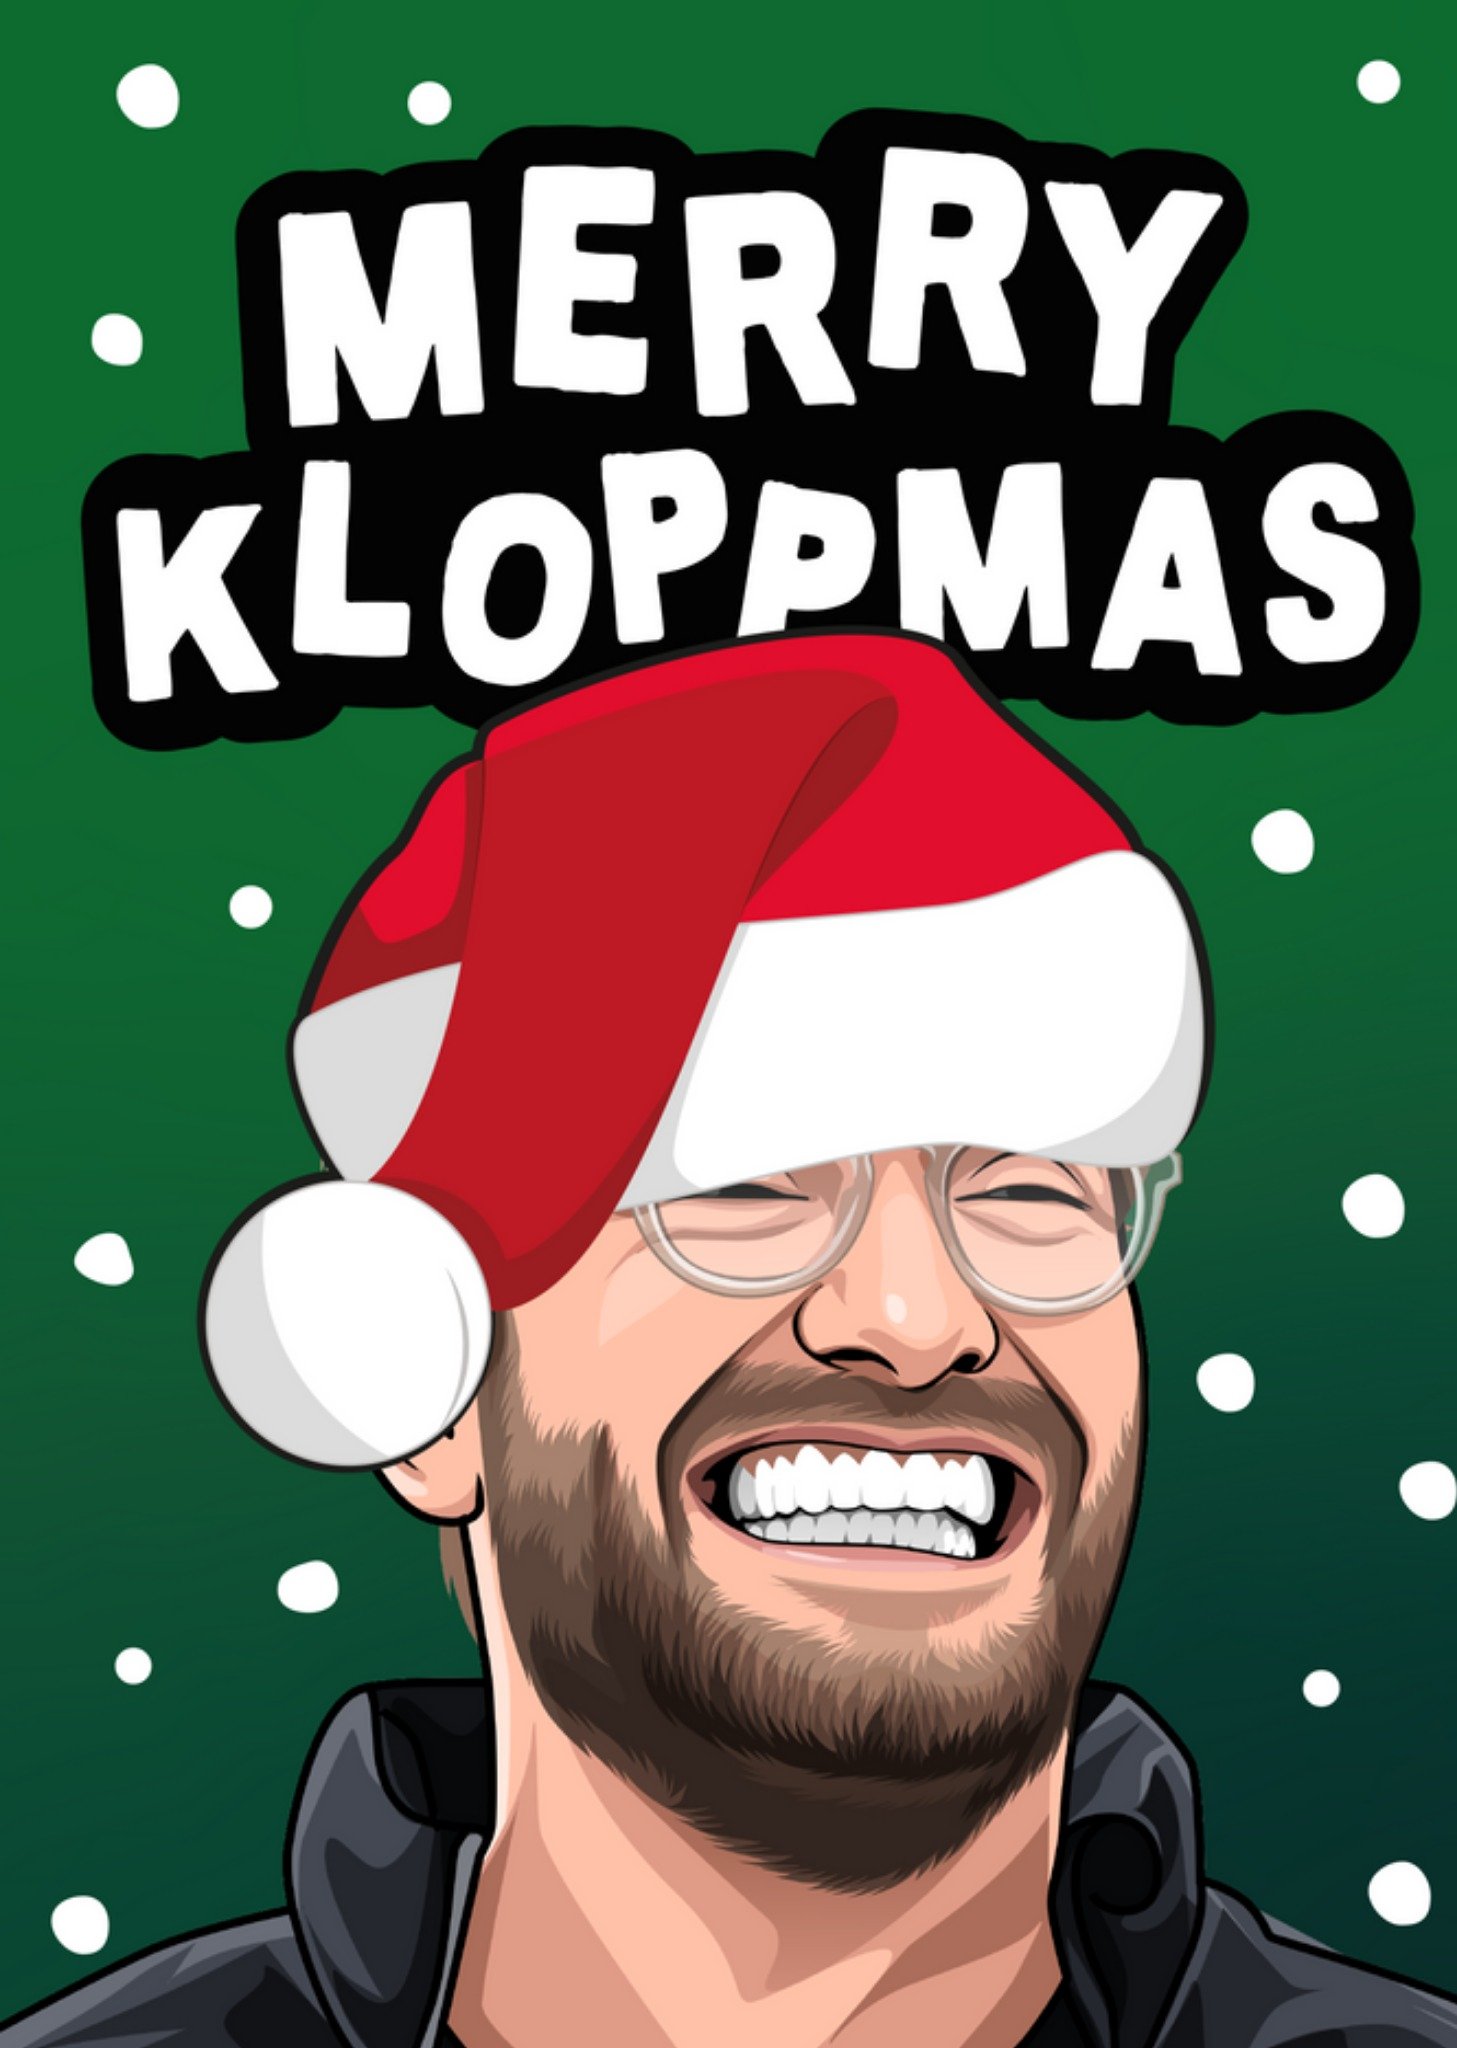 Moonpig Funny Pun Topical Football Merry Christmas Card Ecard